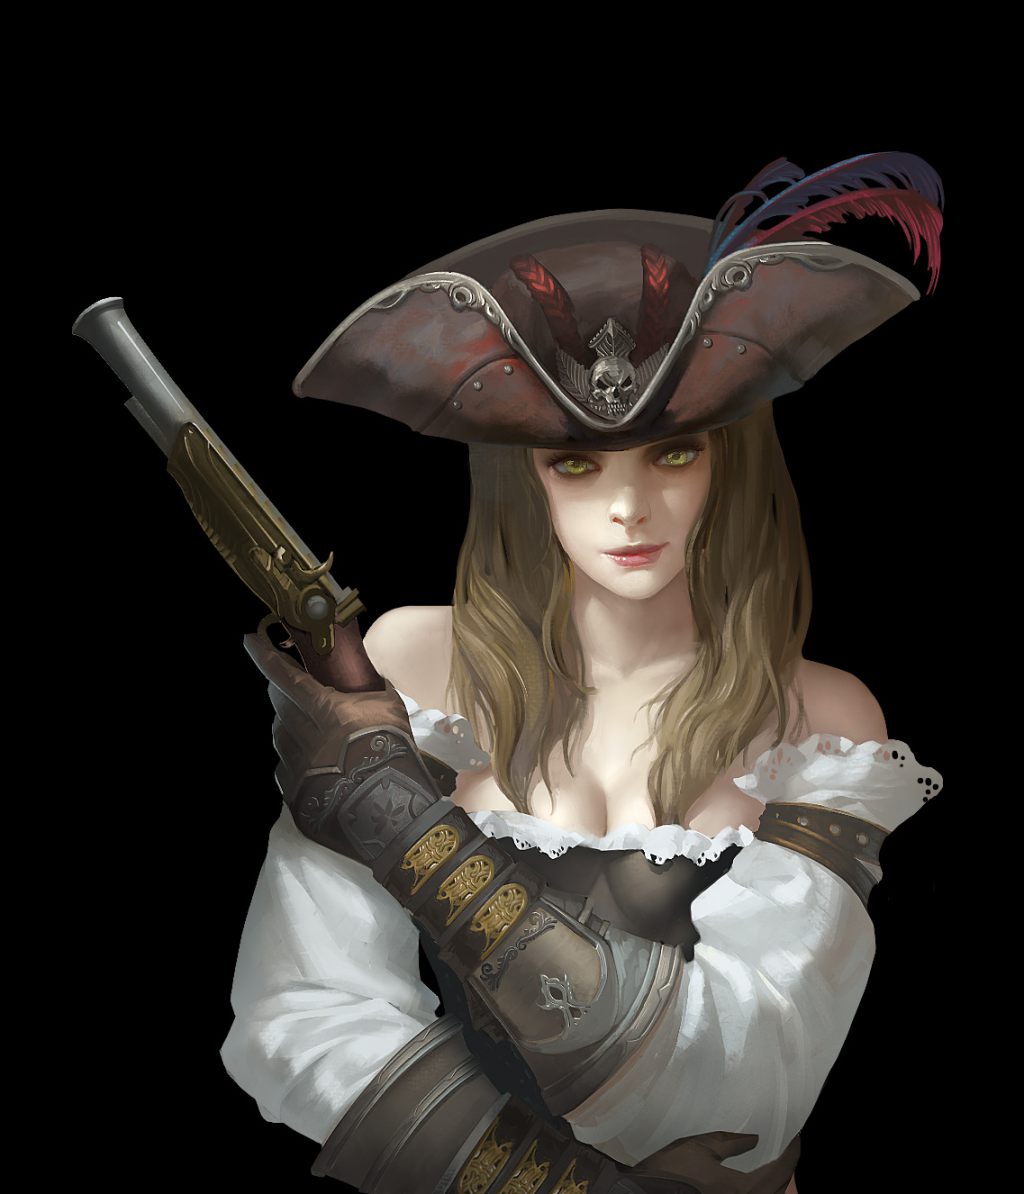 Lethal company girl. Альвильда Королева пиратов. Девушка пират. Девушка с мушкетом. Девушка пират арт.